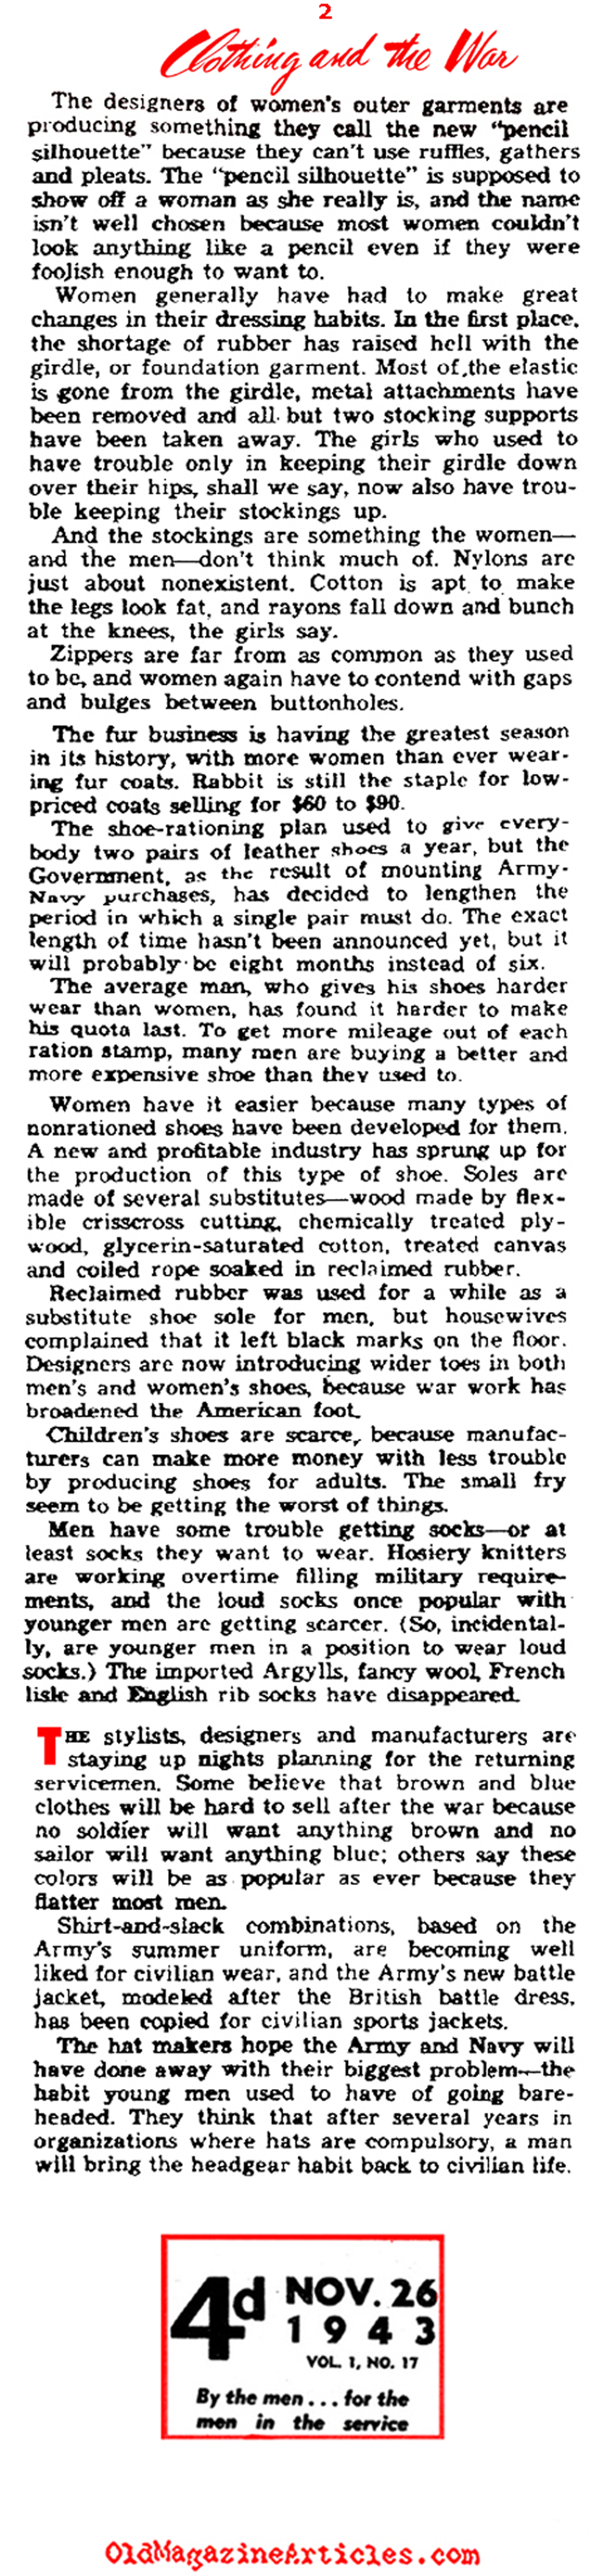 World War II Fabric Rationing in the United States (Yank Magazine, 1945)